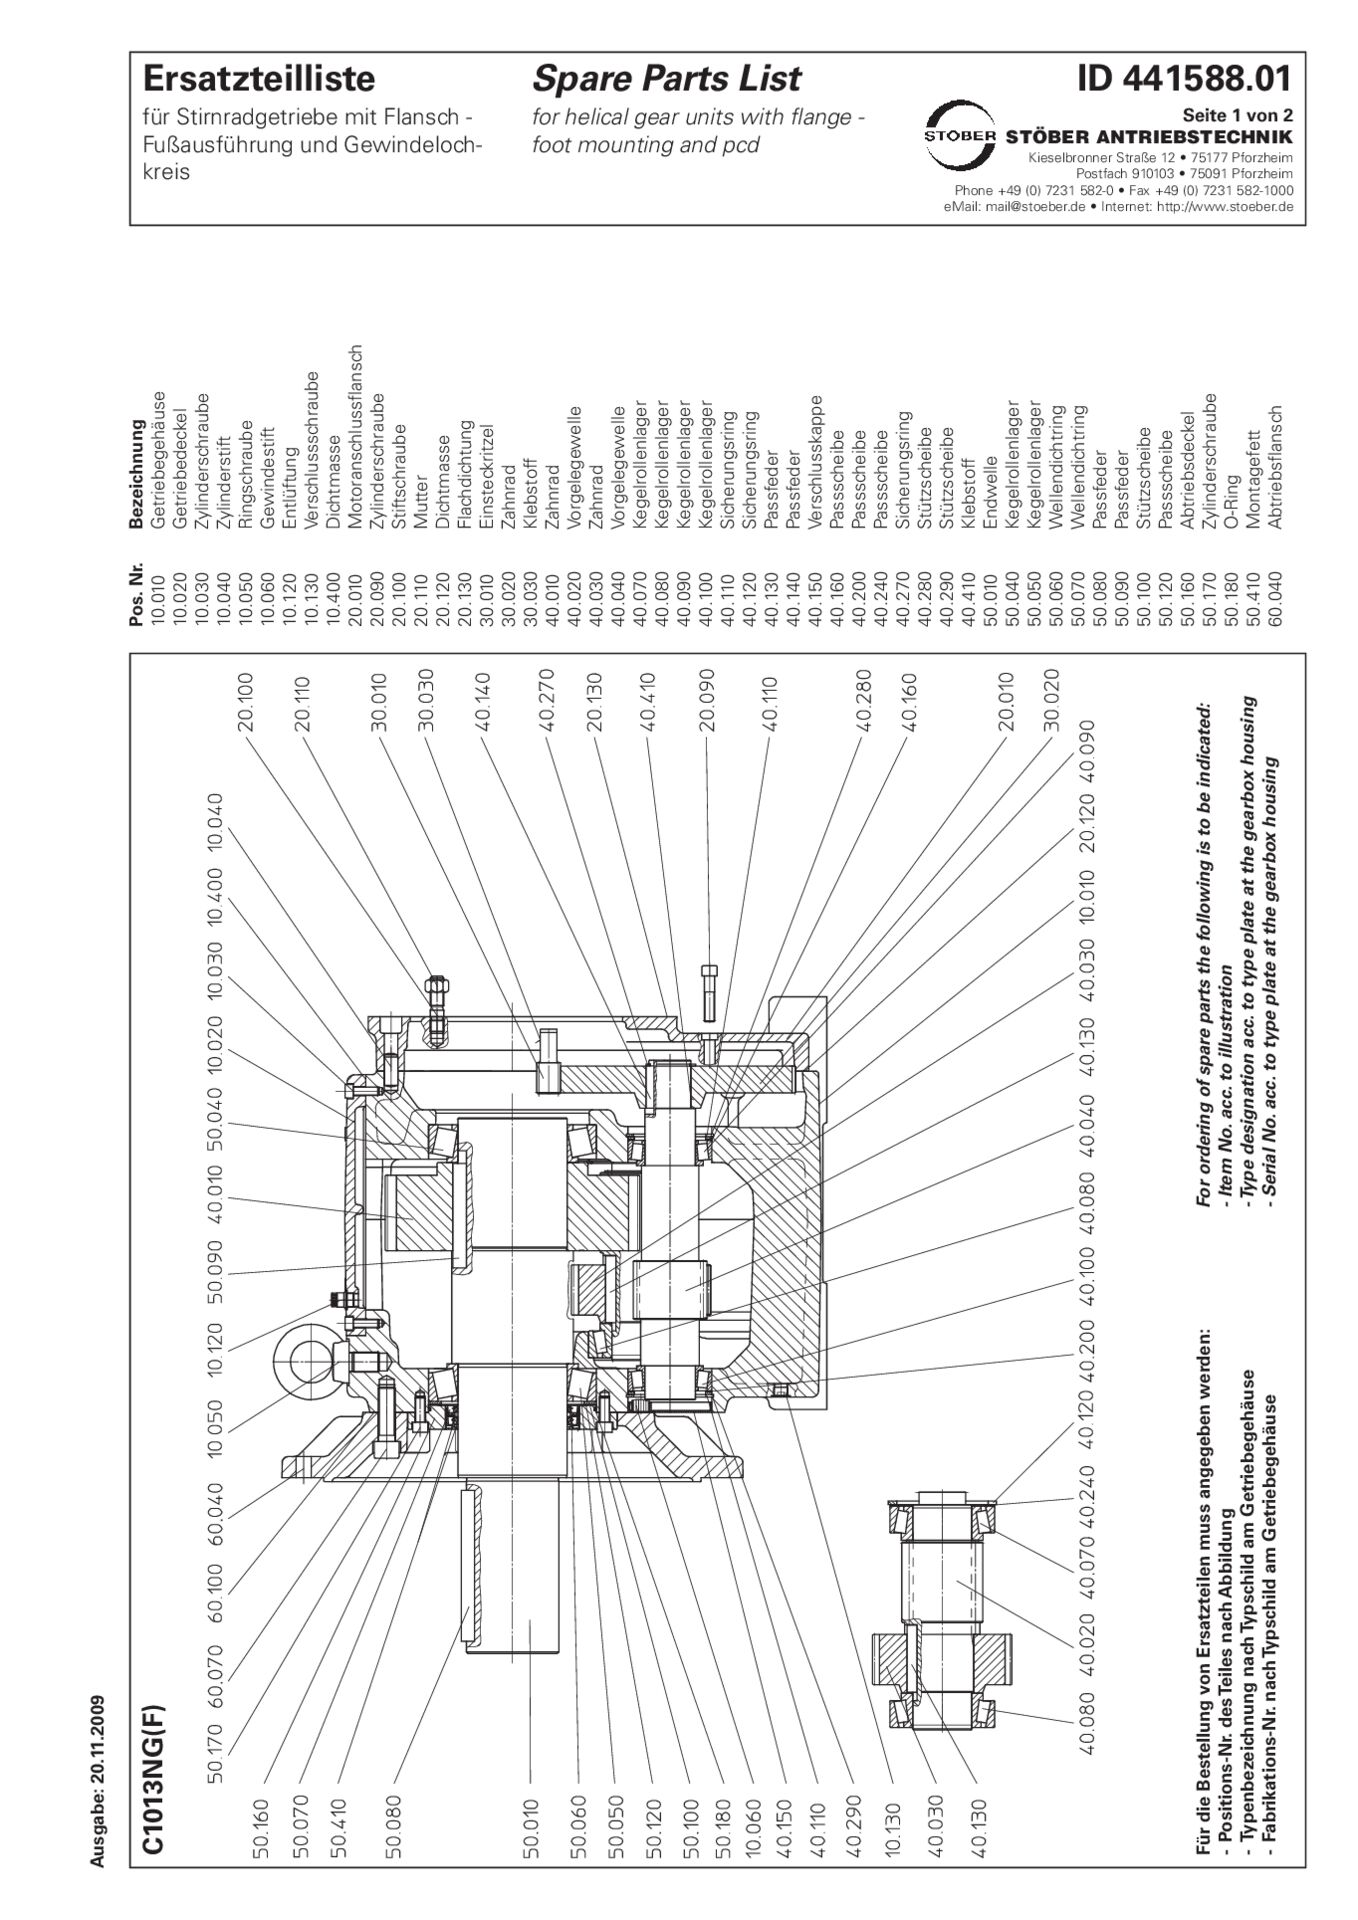 Replacement parts list helical gear units C1013 NG NFErsatzteilliste Stirnradgetriebe C1013 NG NF